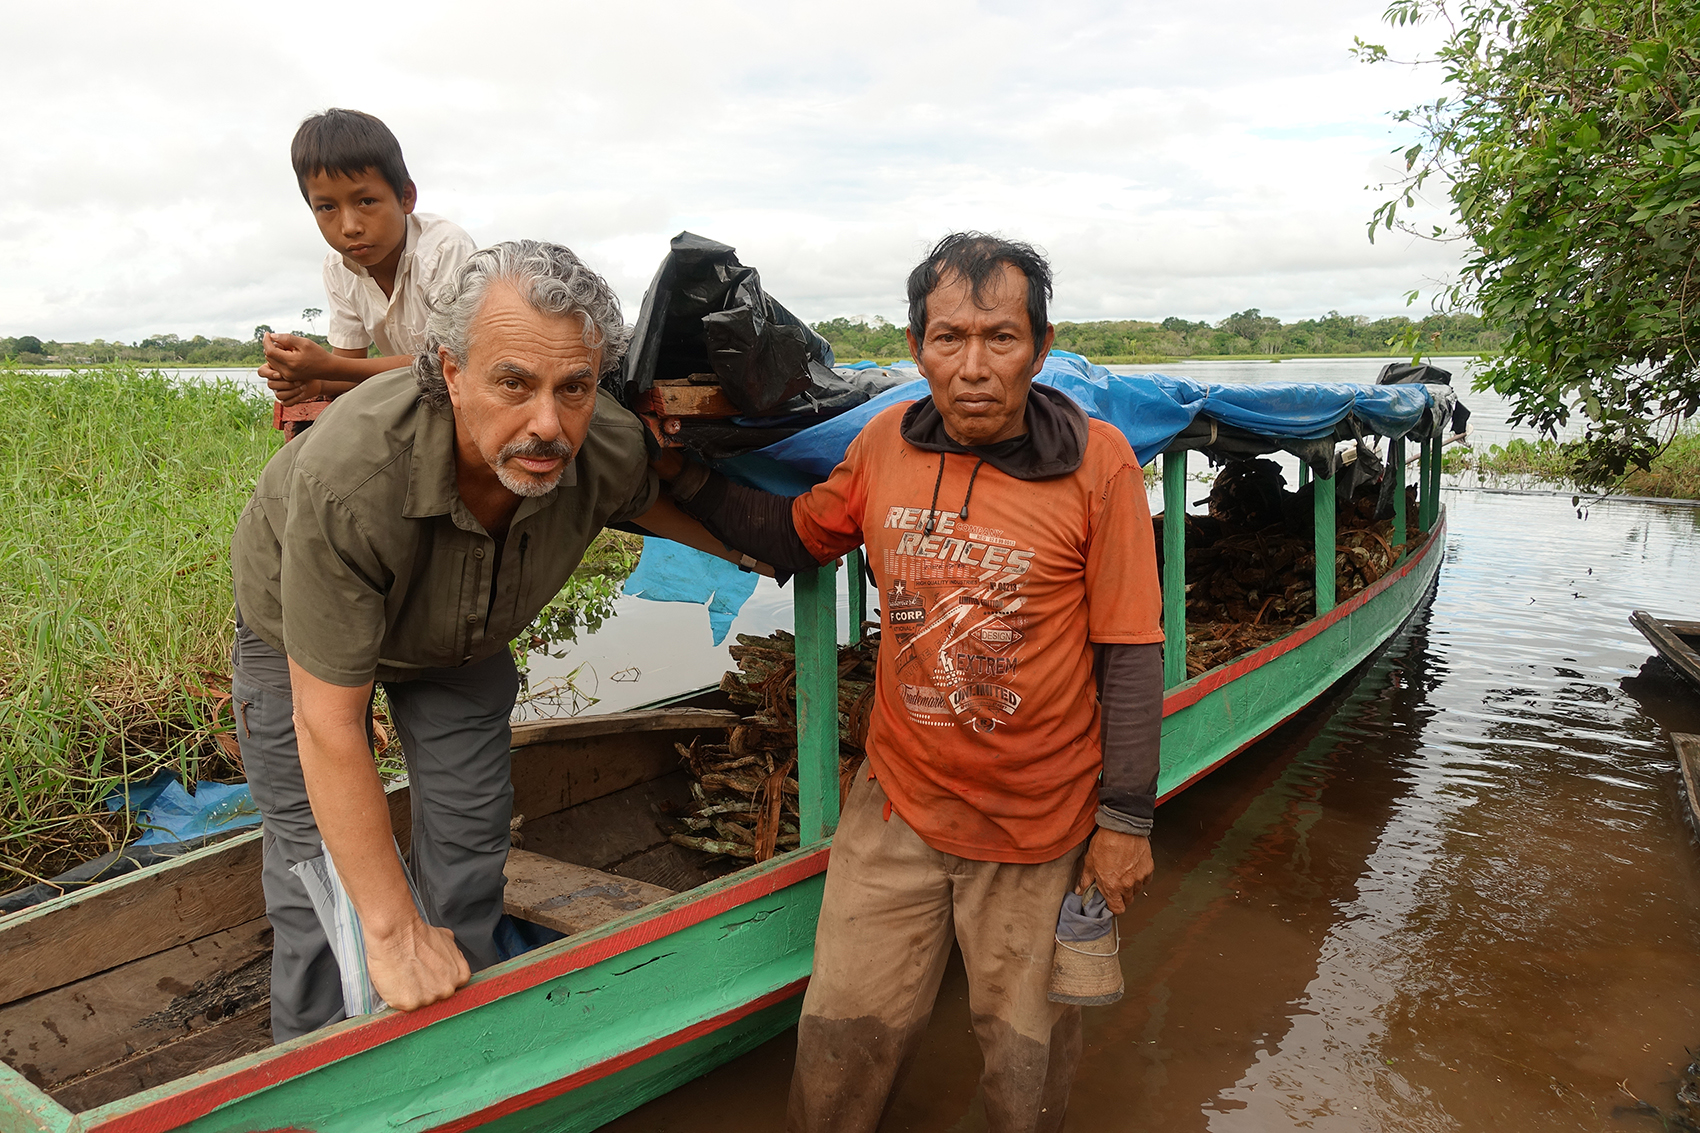 Chris Kilham with ayahuasca harvester Antonia Cauper in the Peruvian Amazon